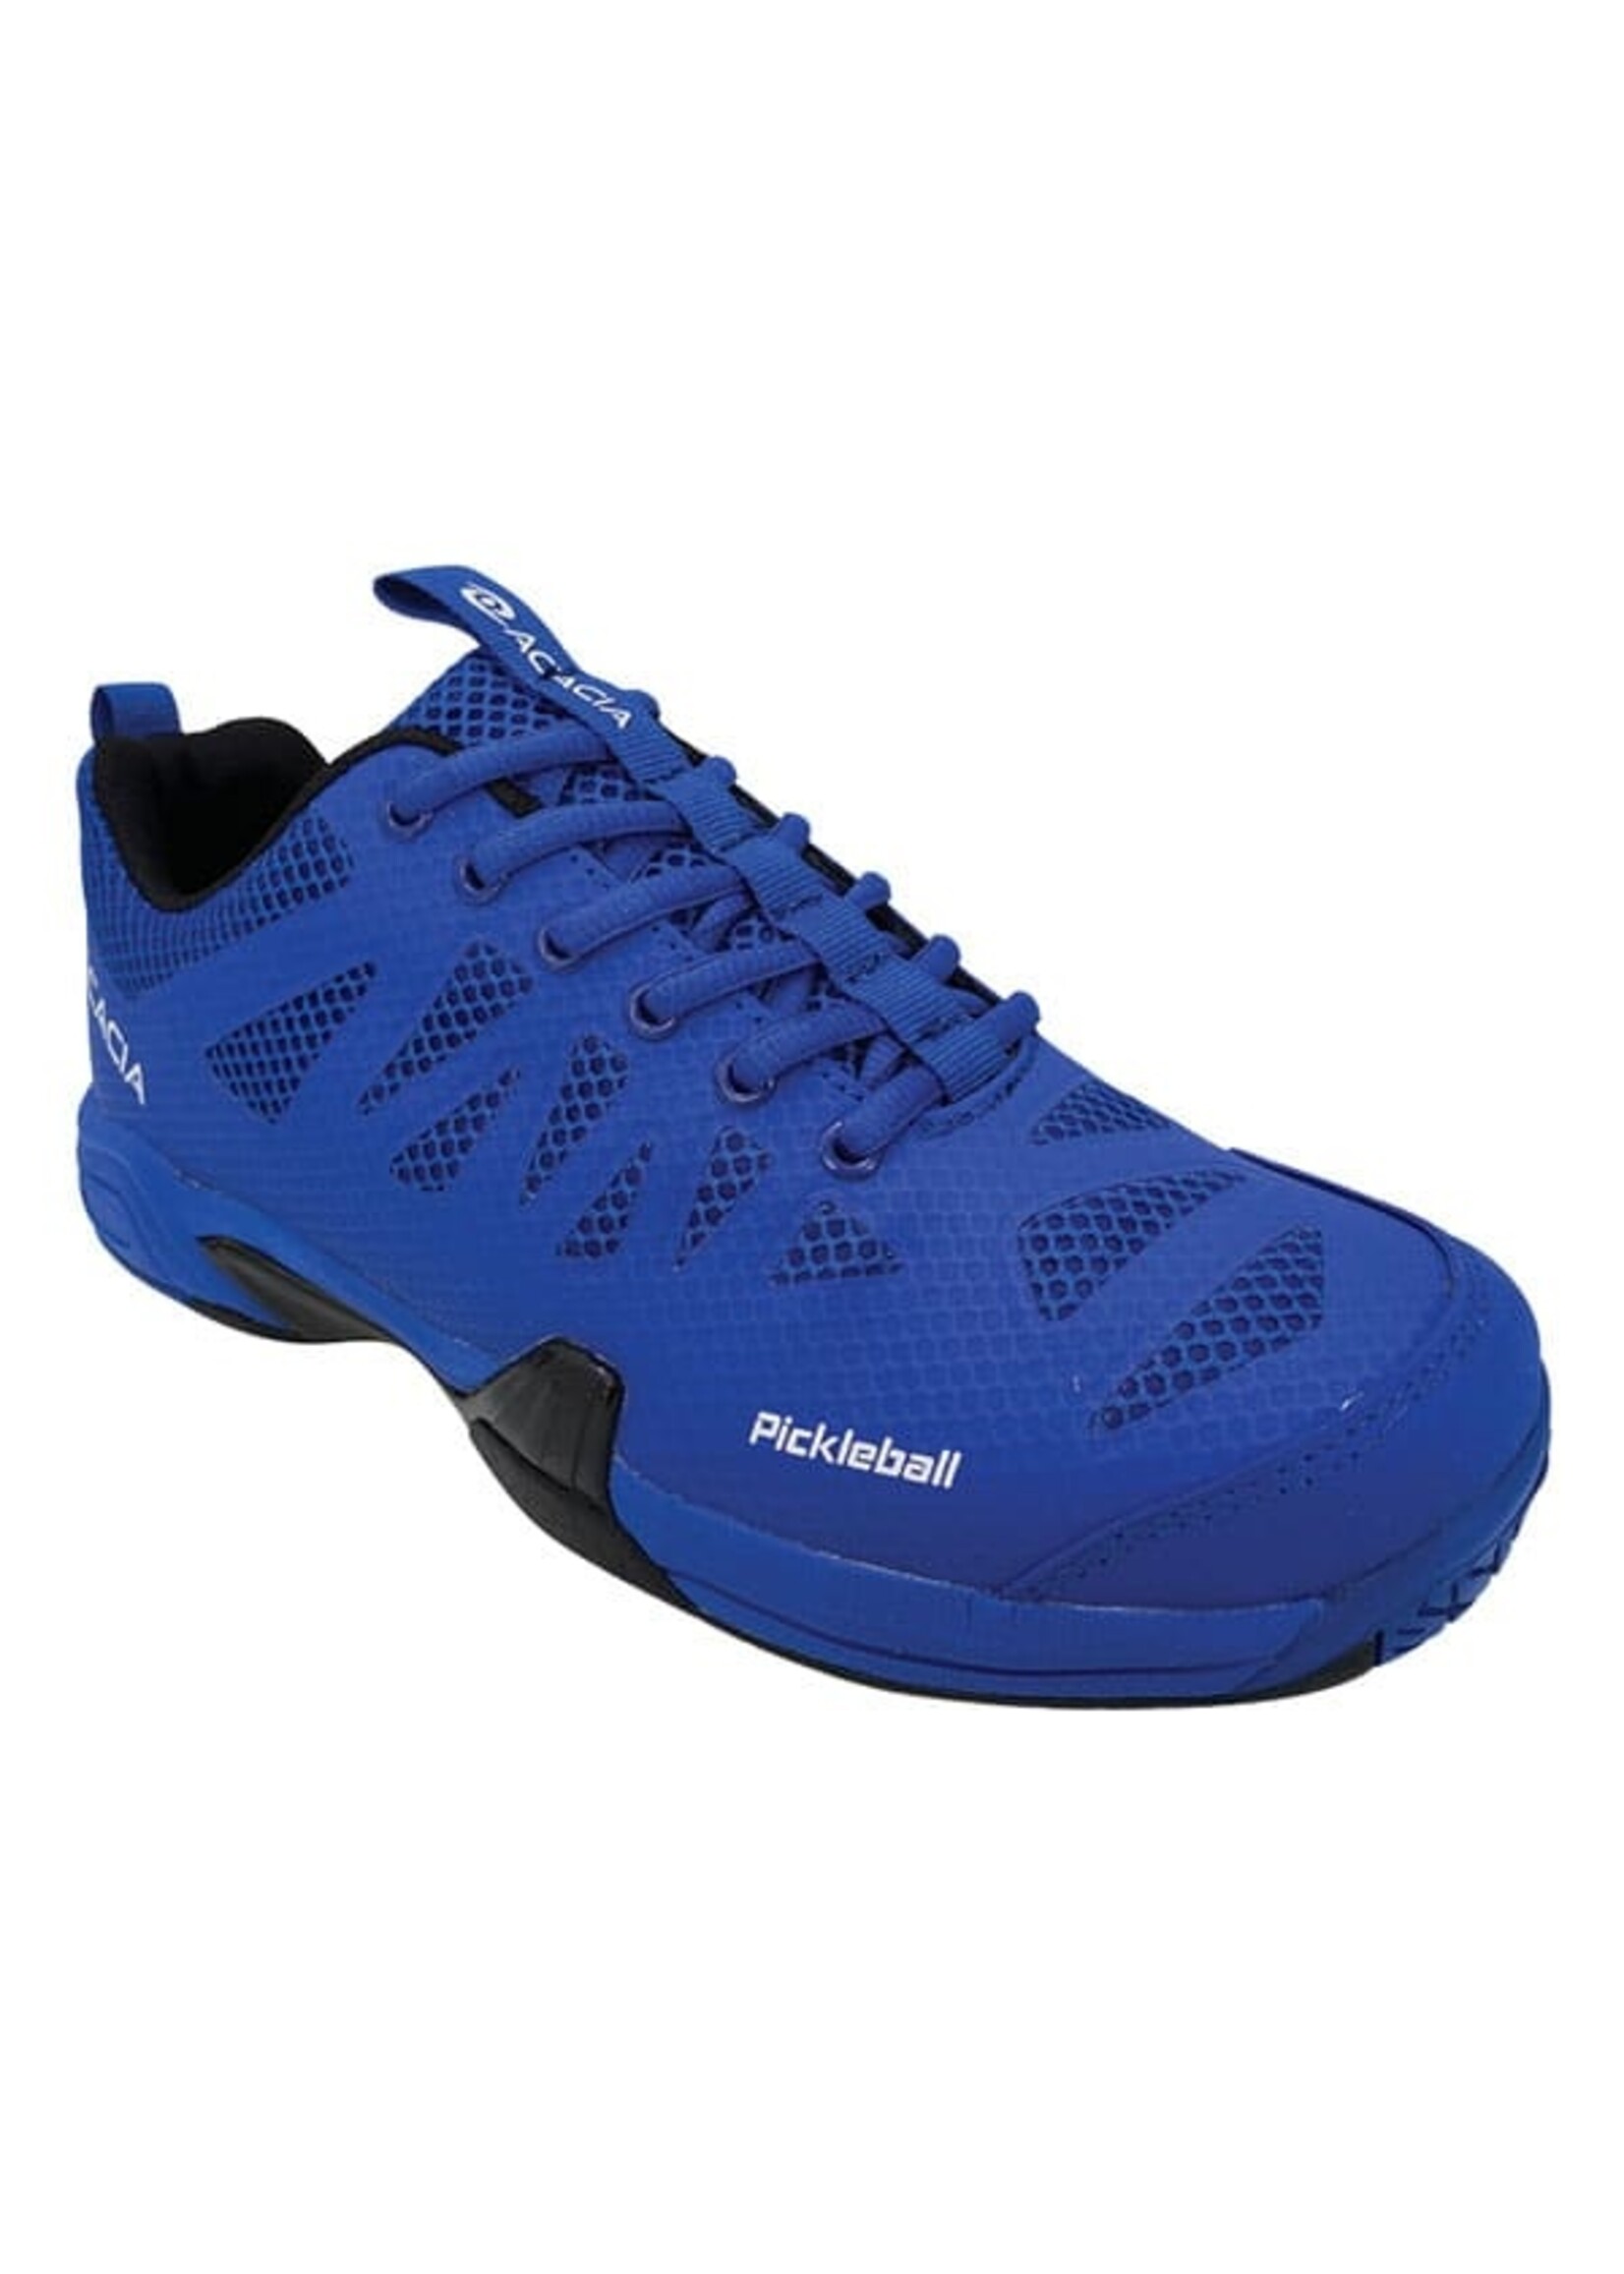 Acacia Sports Proshot Pickleball Shoes